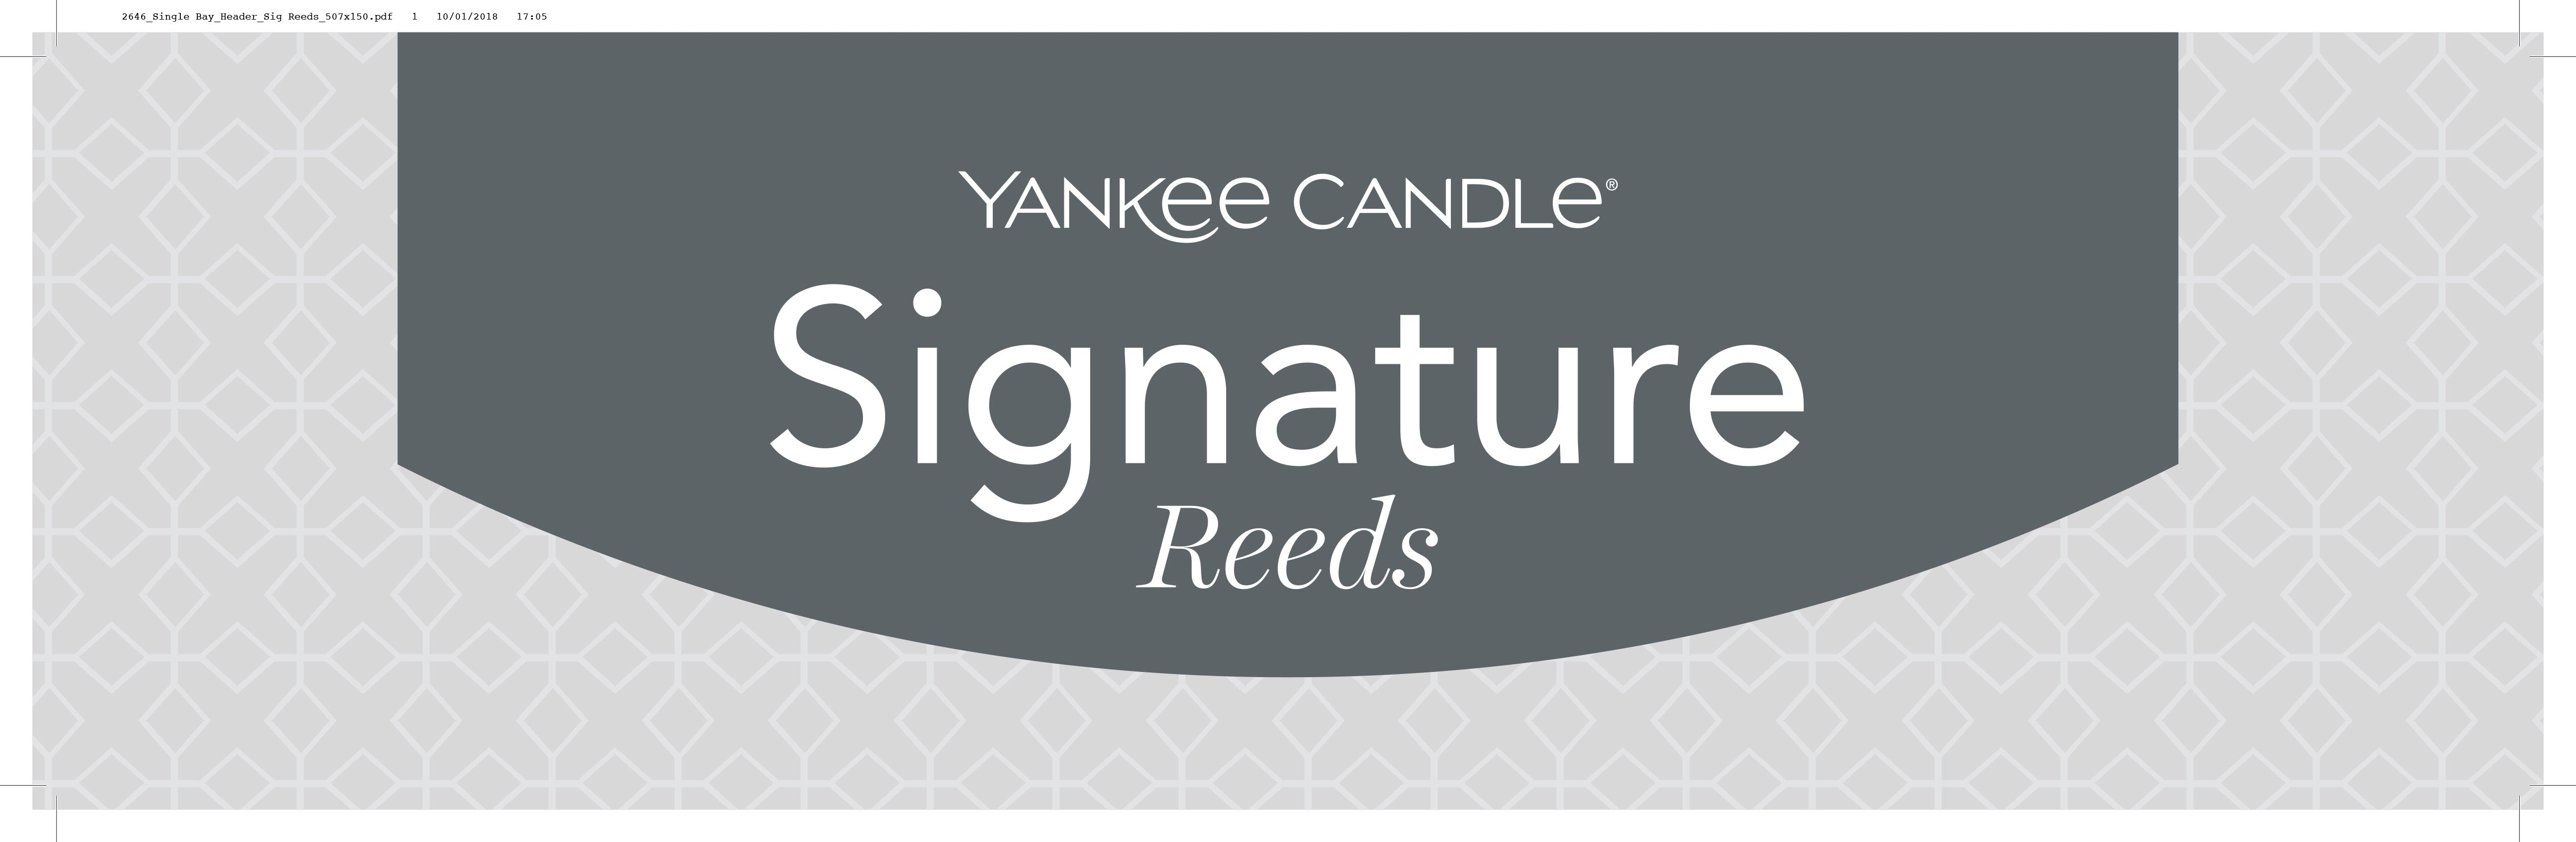 Yankee Candle Signature Reeds